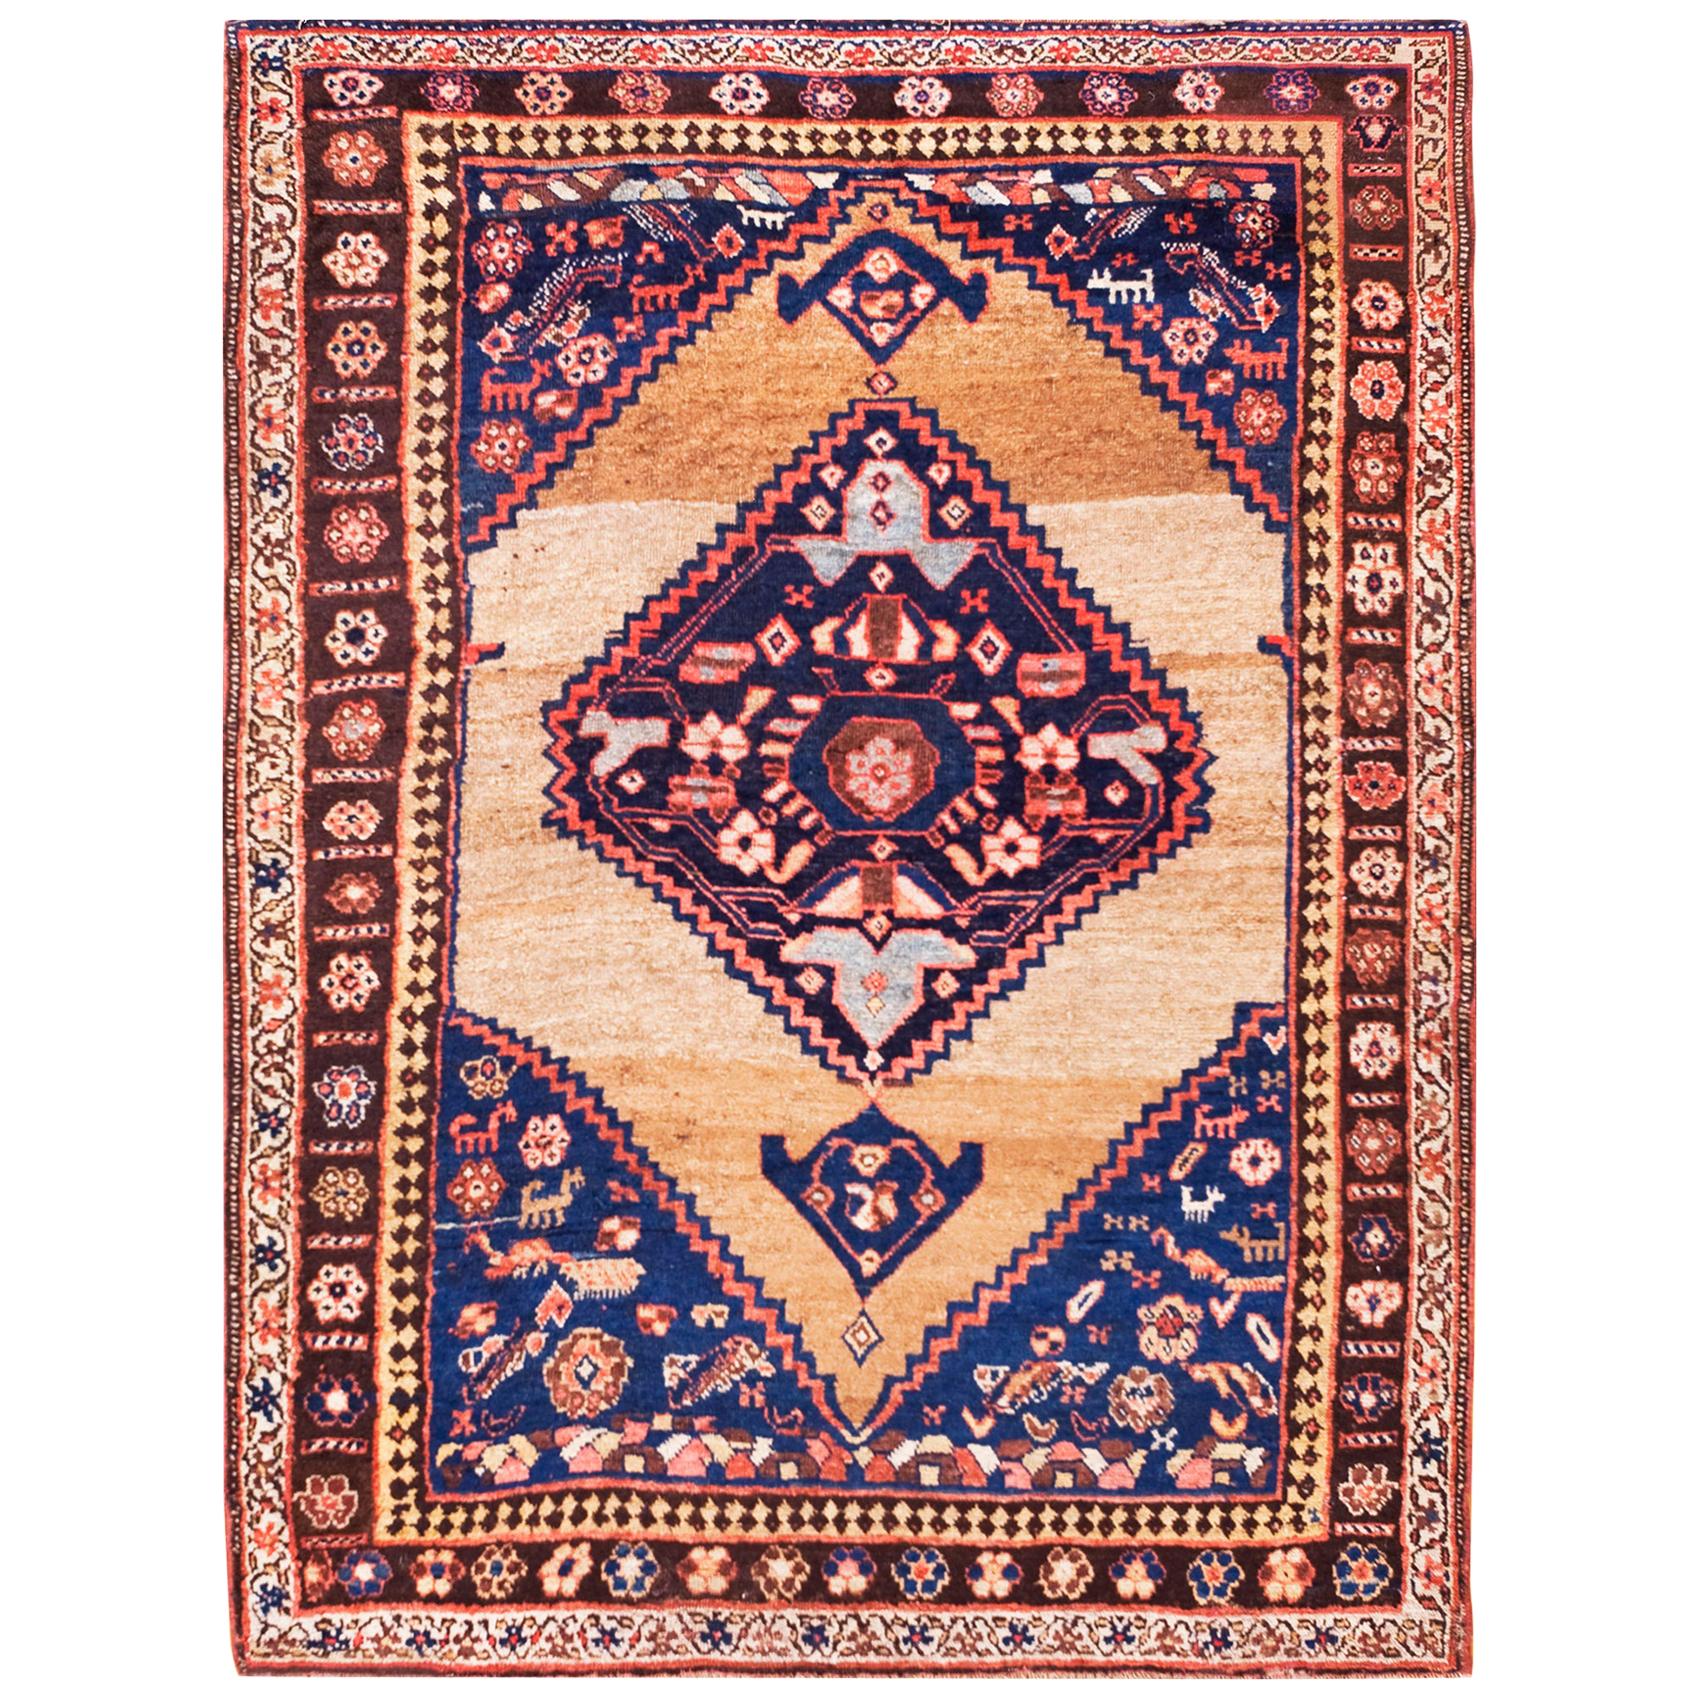 Late 19th Century W. Persian Bijar Rug ( 4'5" x 5'9" - 135 x 175 )